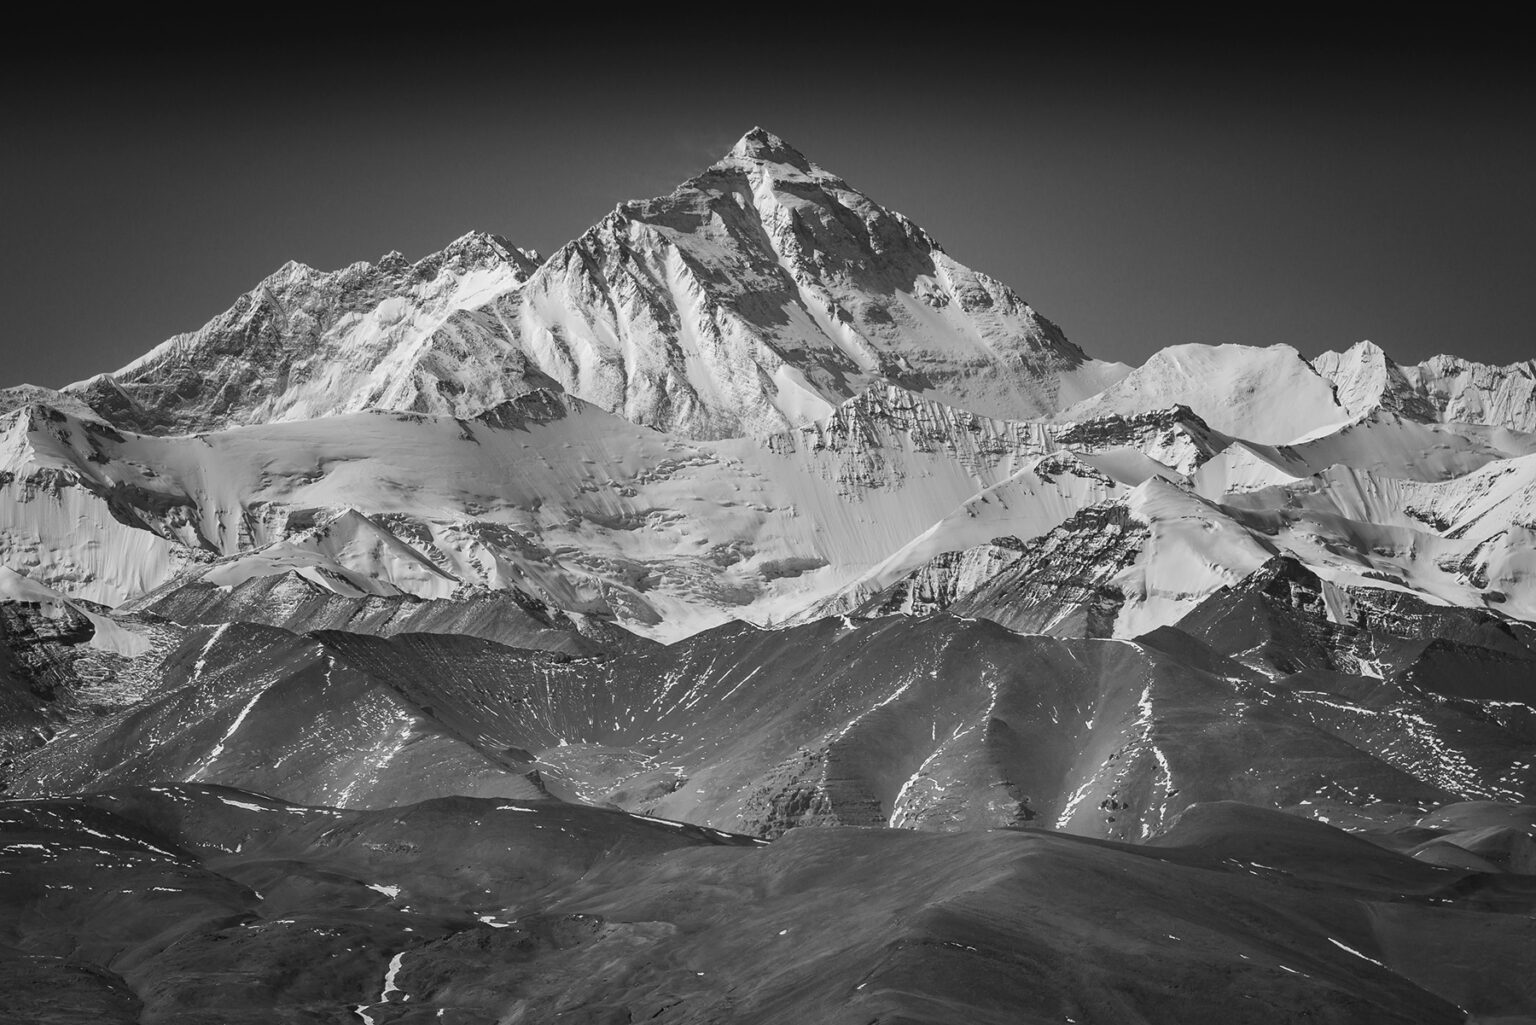 Mount Everest by Cory Richards